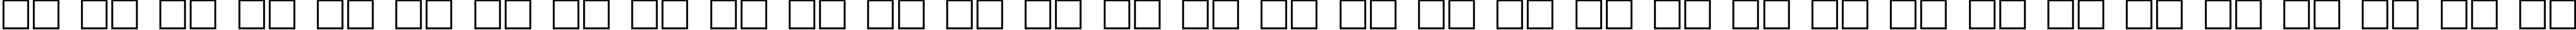 Пример написания русского алфавита шрифтом GOST type B